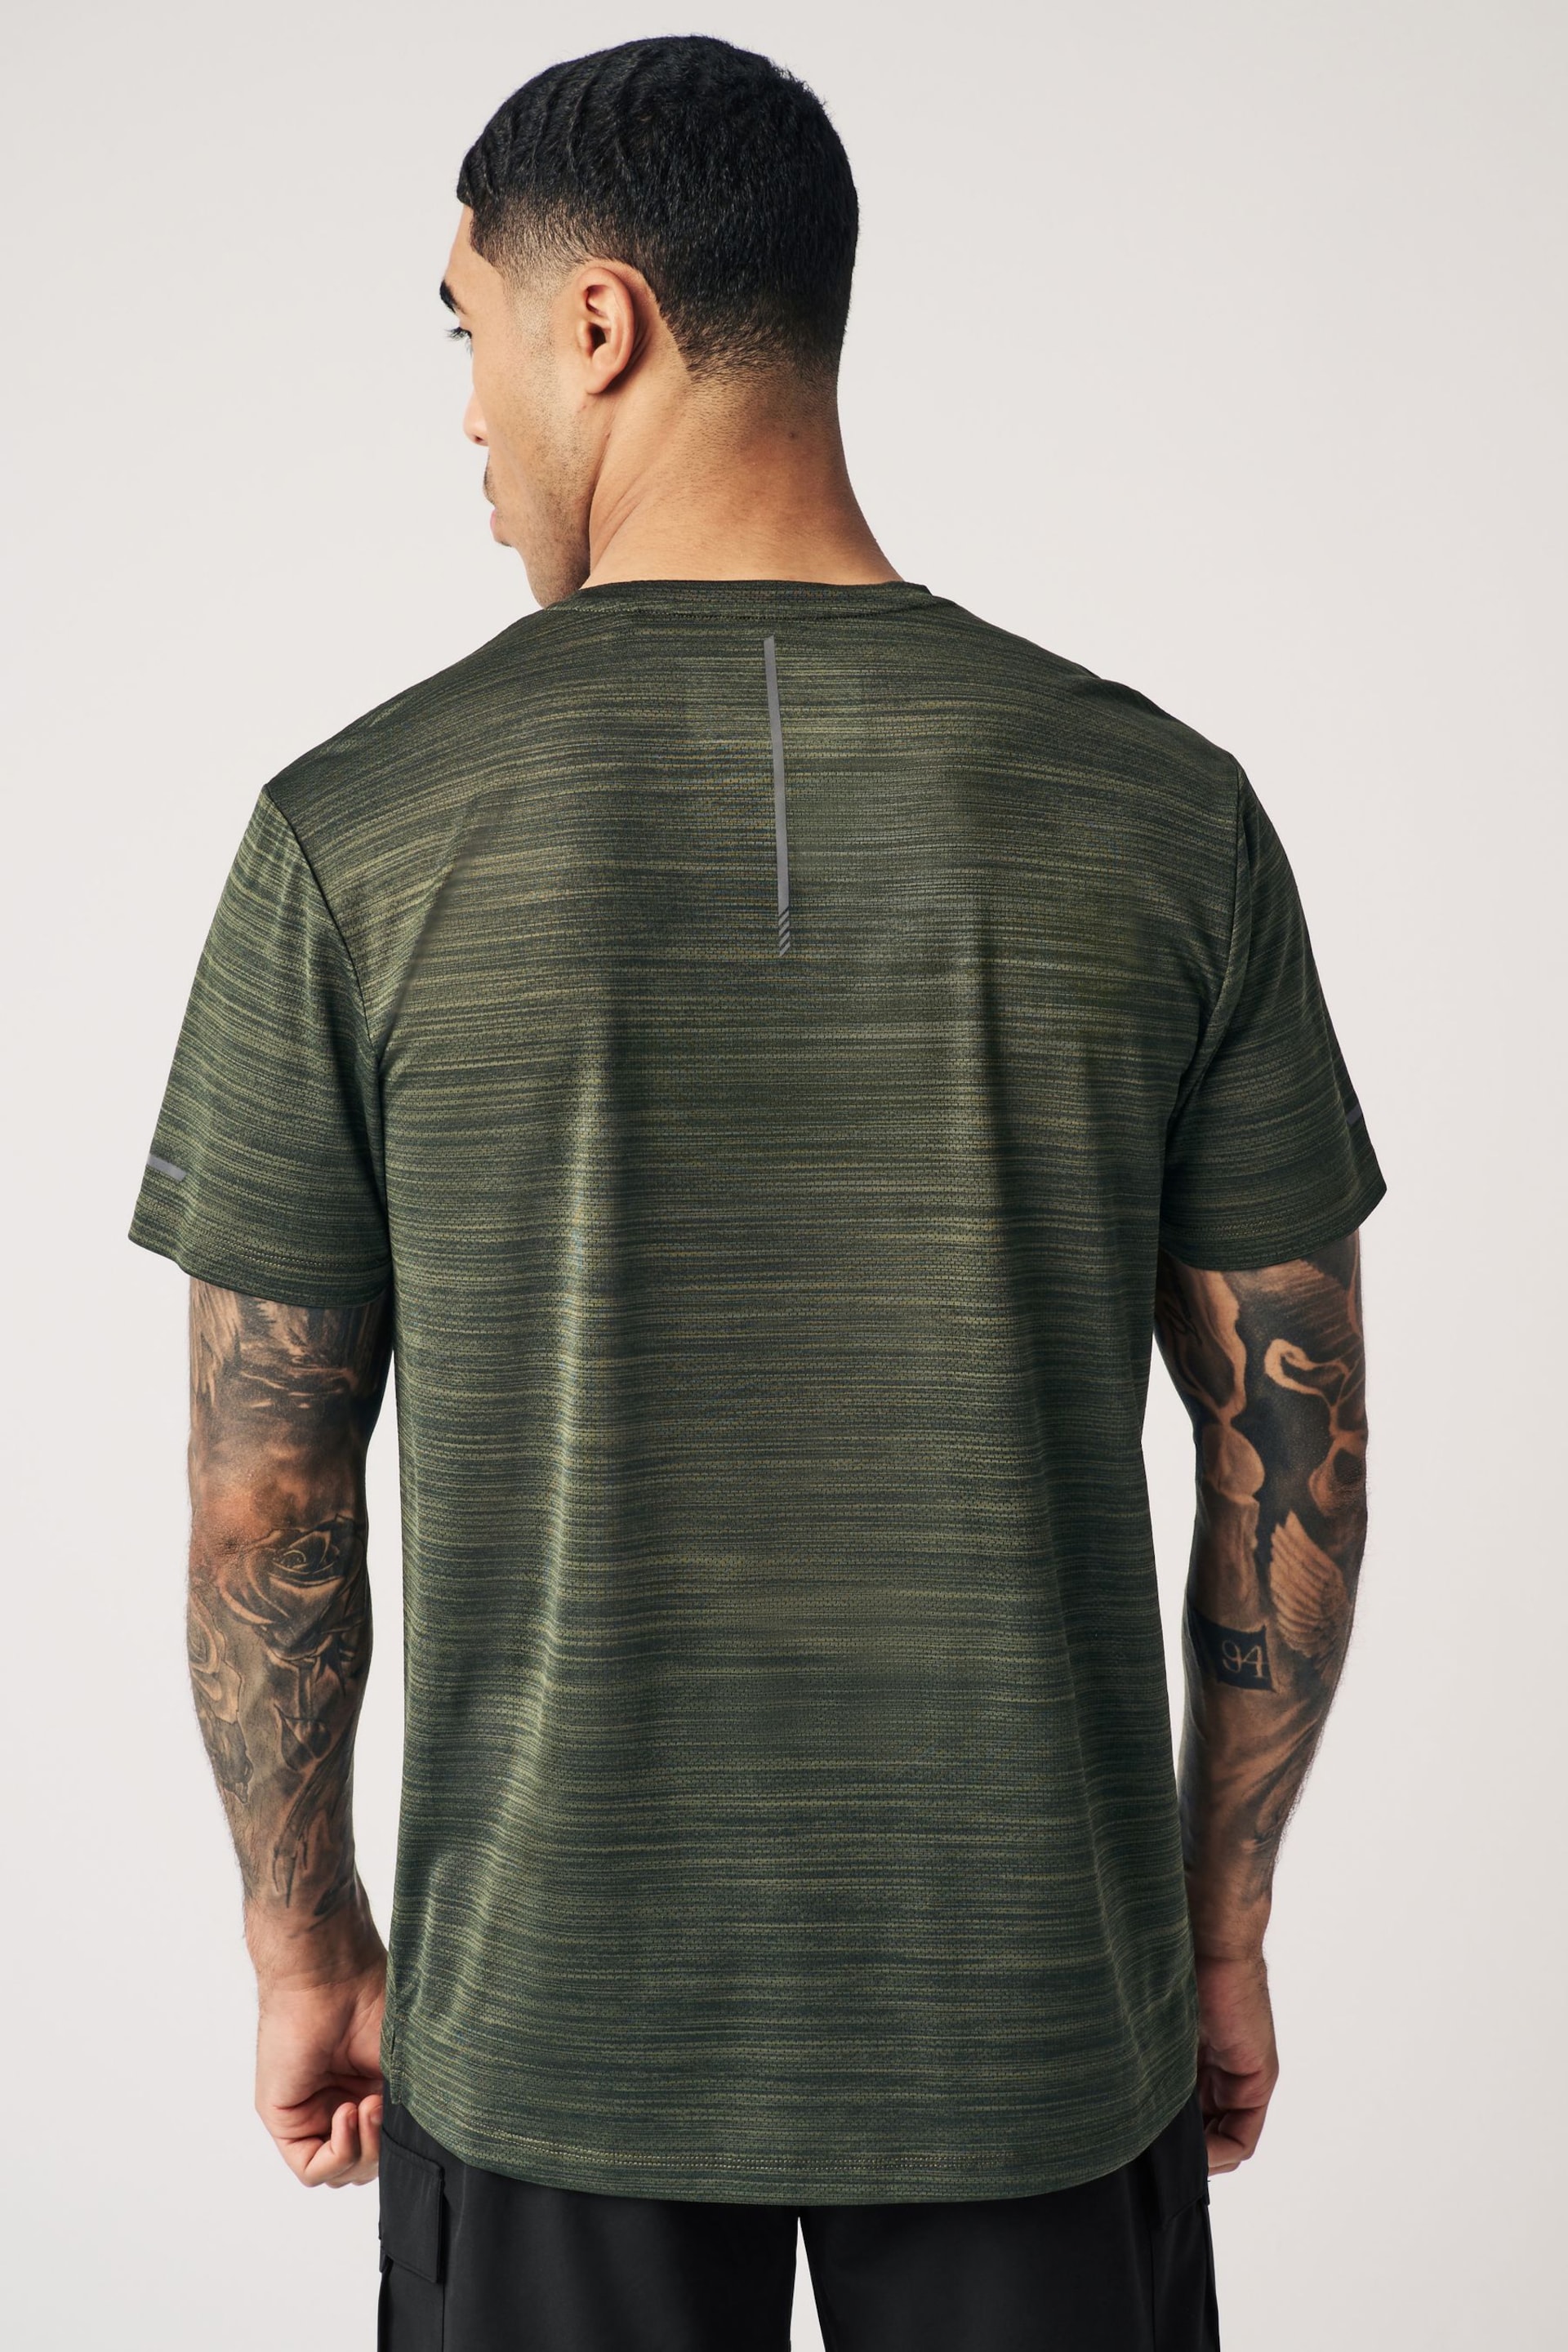 Khaki Green Active Mesh Training T-Shirt - Image 4 of 11